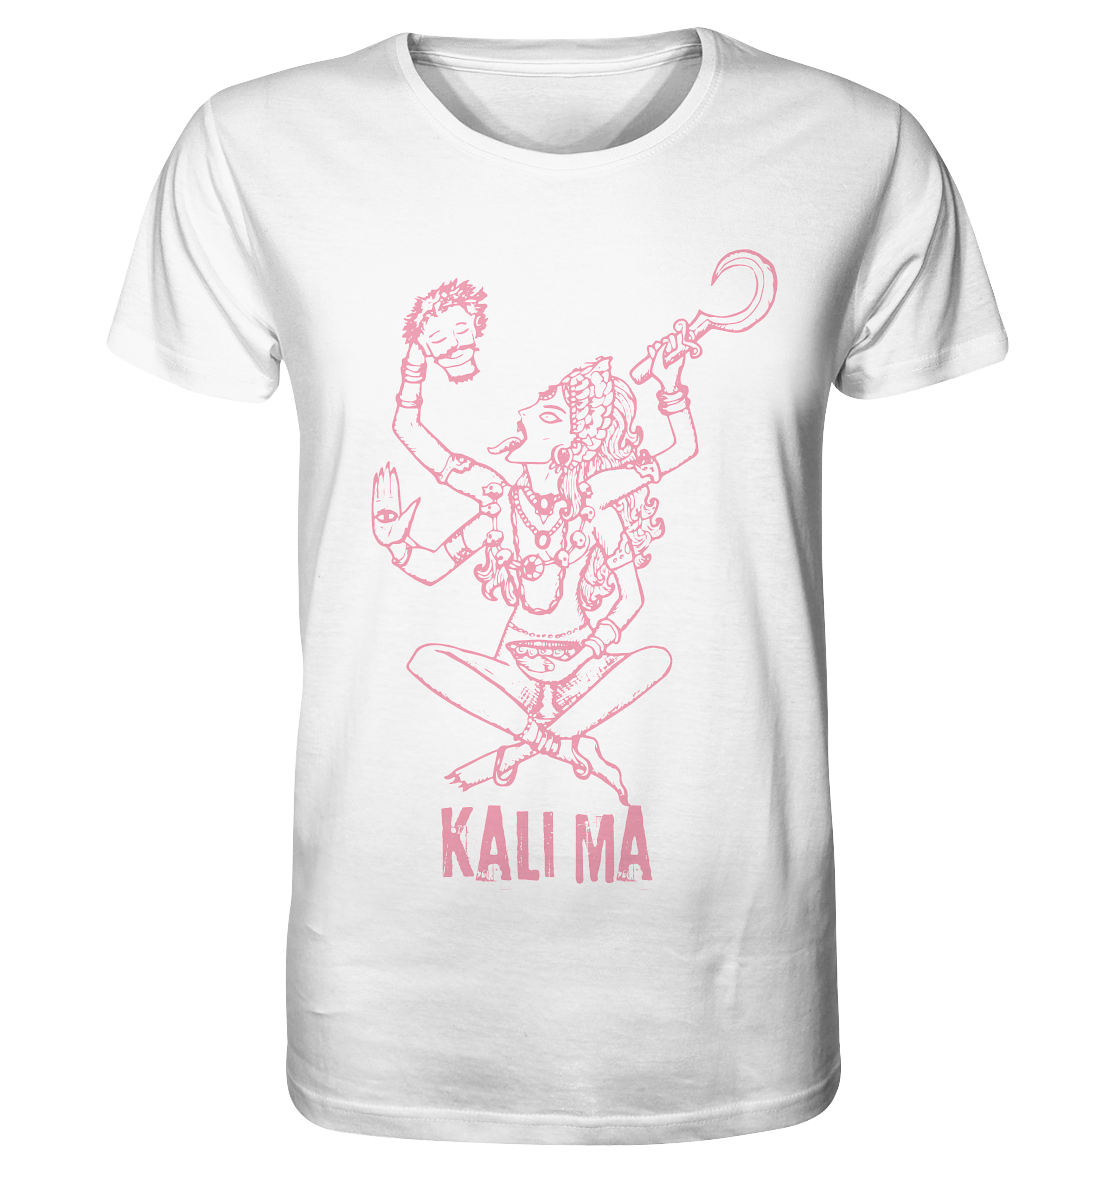 Kali Ma | Premium organic men's t-shirt